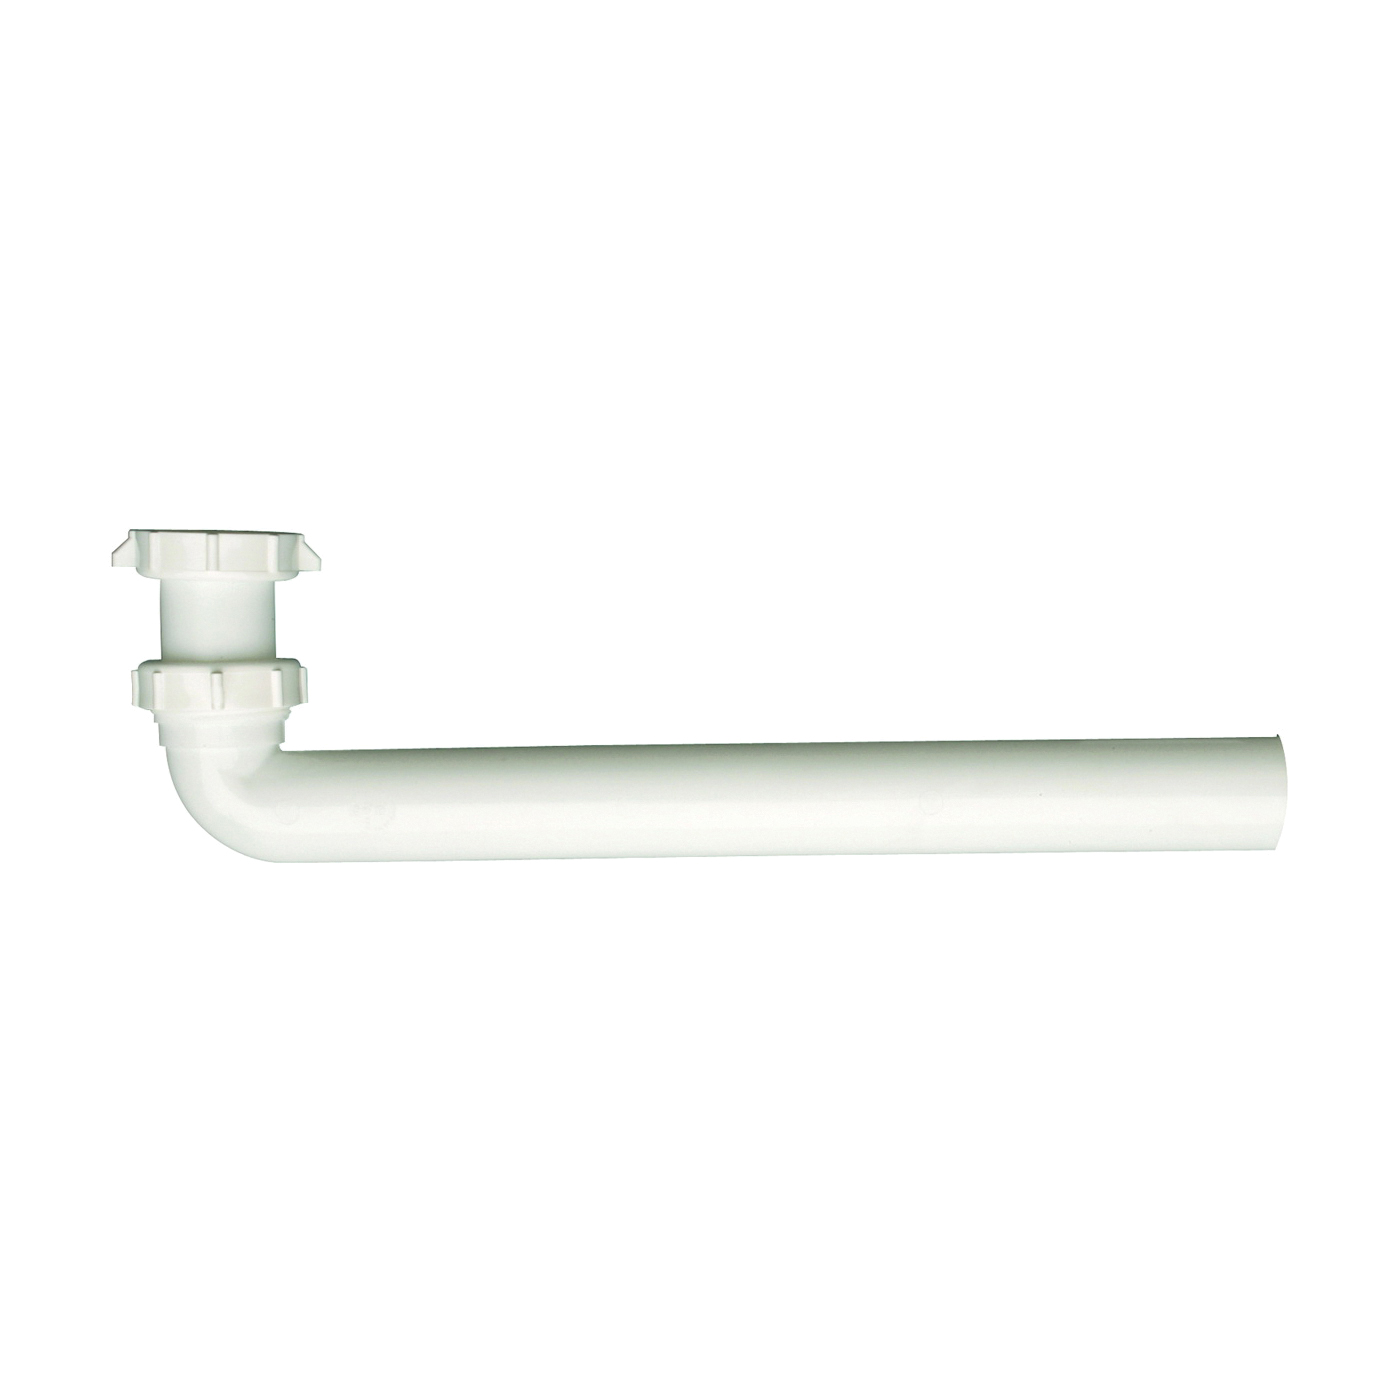 PP66-9W Drain Tube, 1-1/2 in, 15 in L, Slip Joint, Polypropylene, White